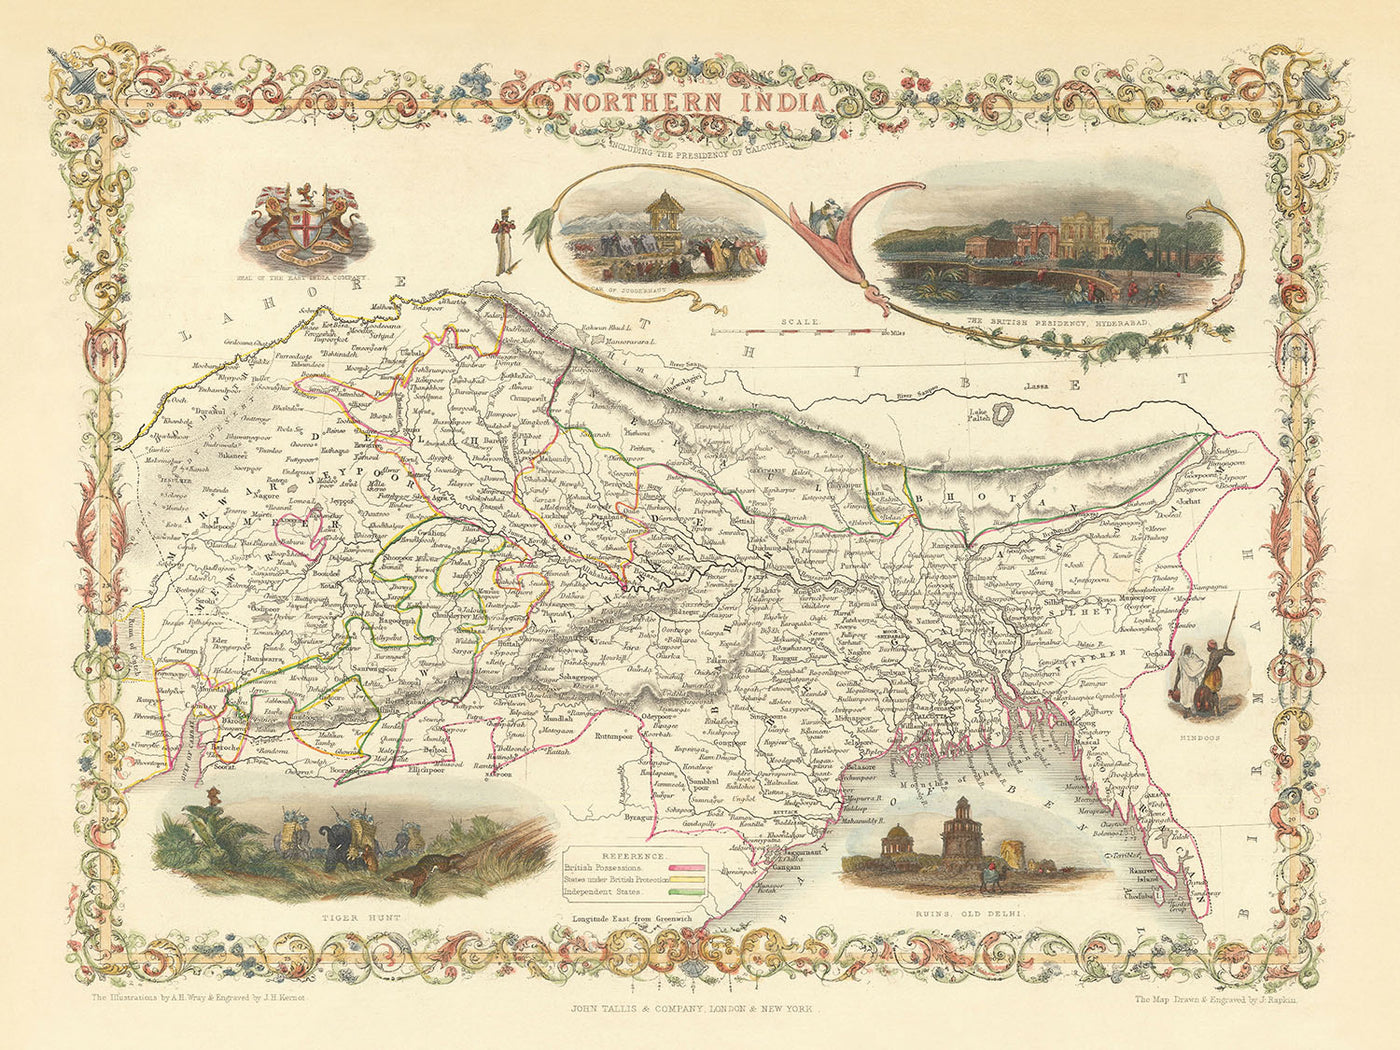 Old Map of Northern India, Bangladesh, Bhutan and Nepal by Tallis & Rapkin, 1851: Delhi, Calcutta, Himalayas, Ganges